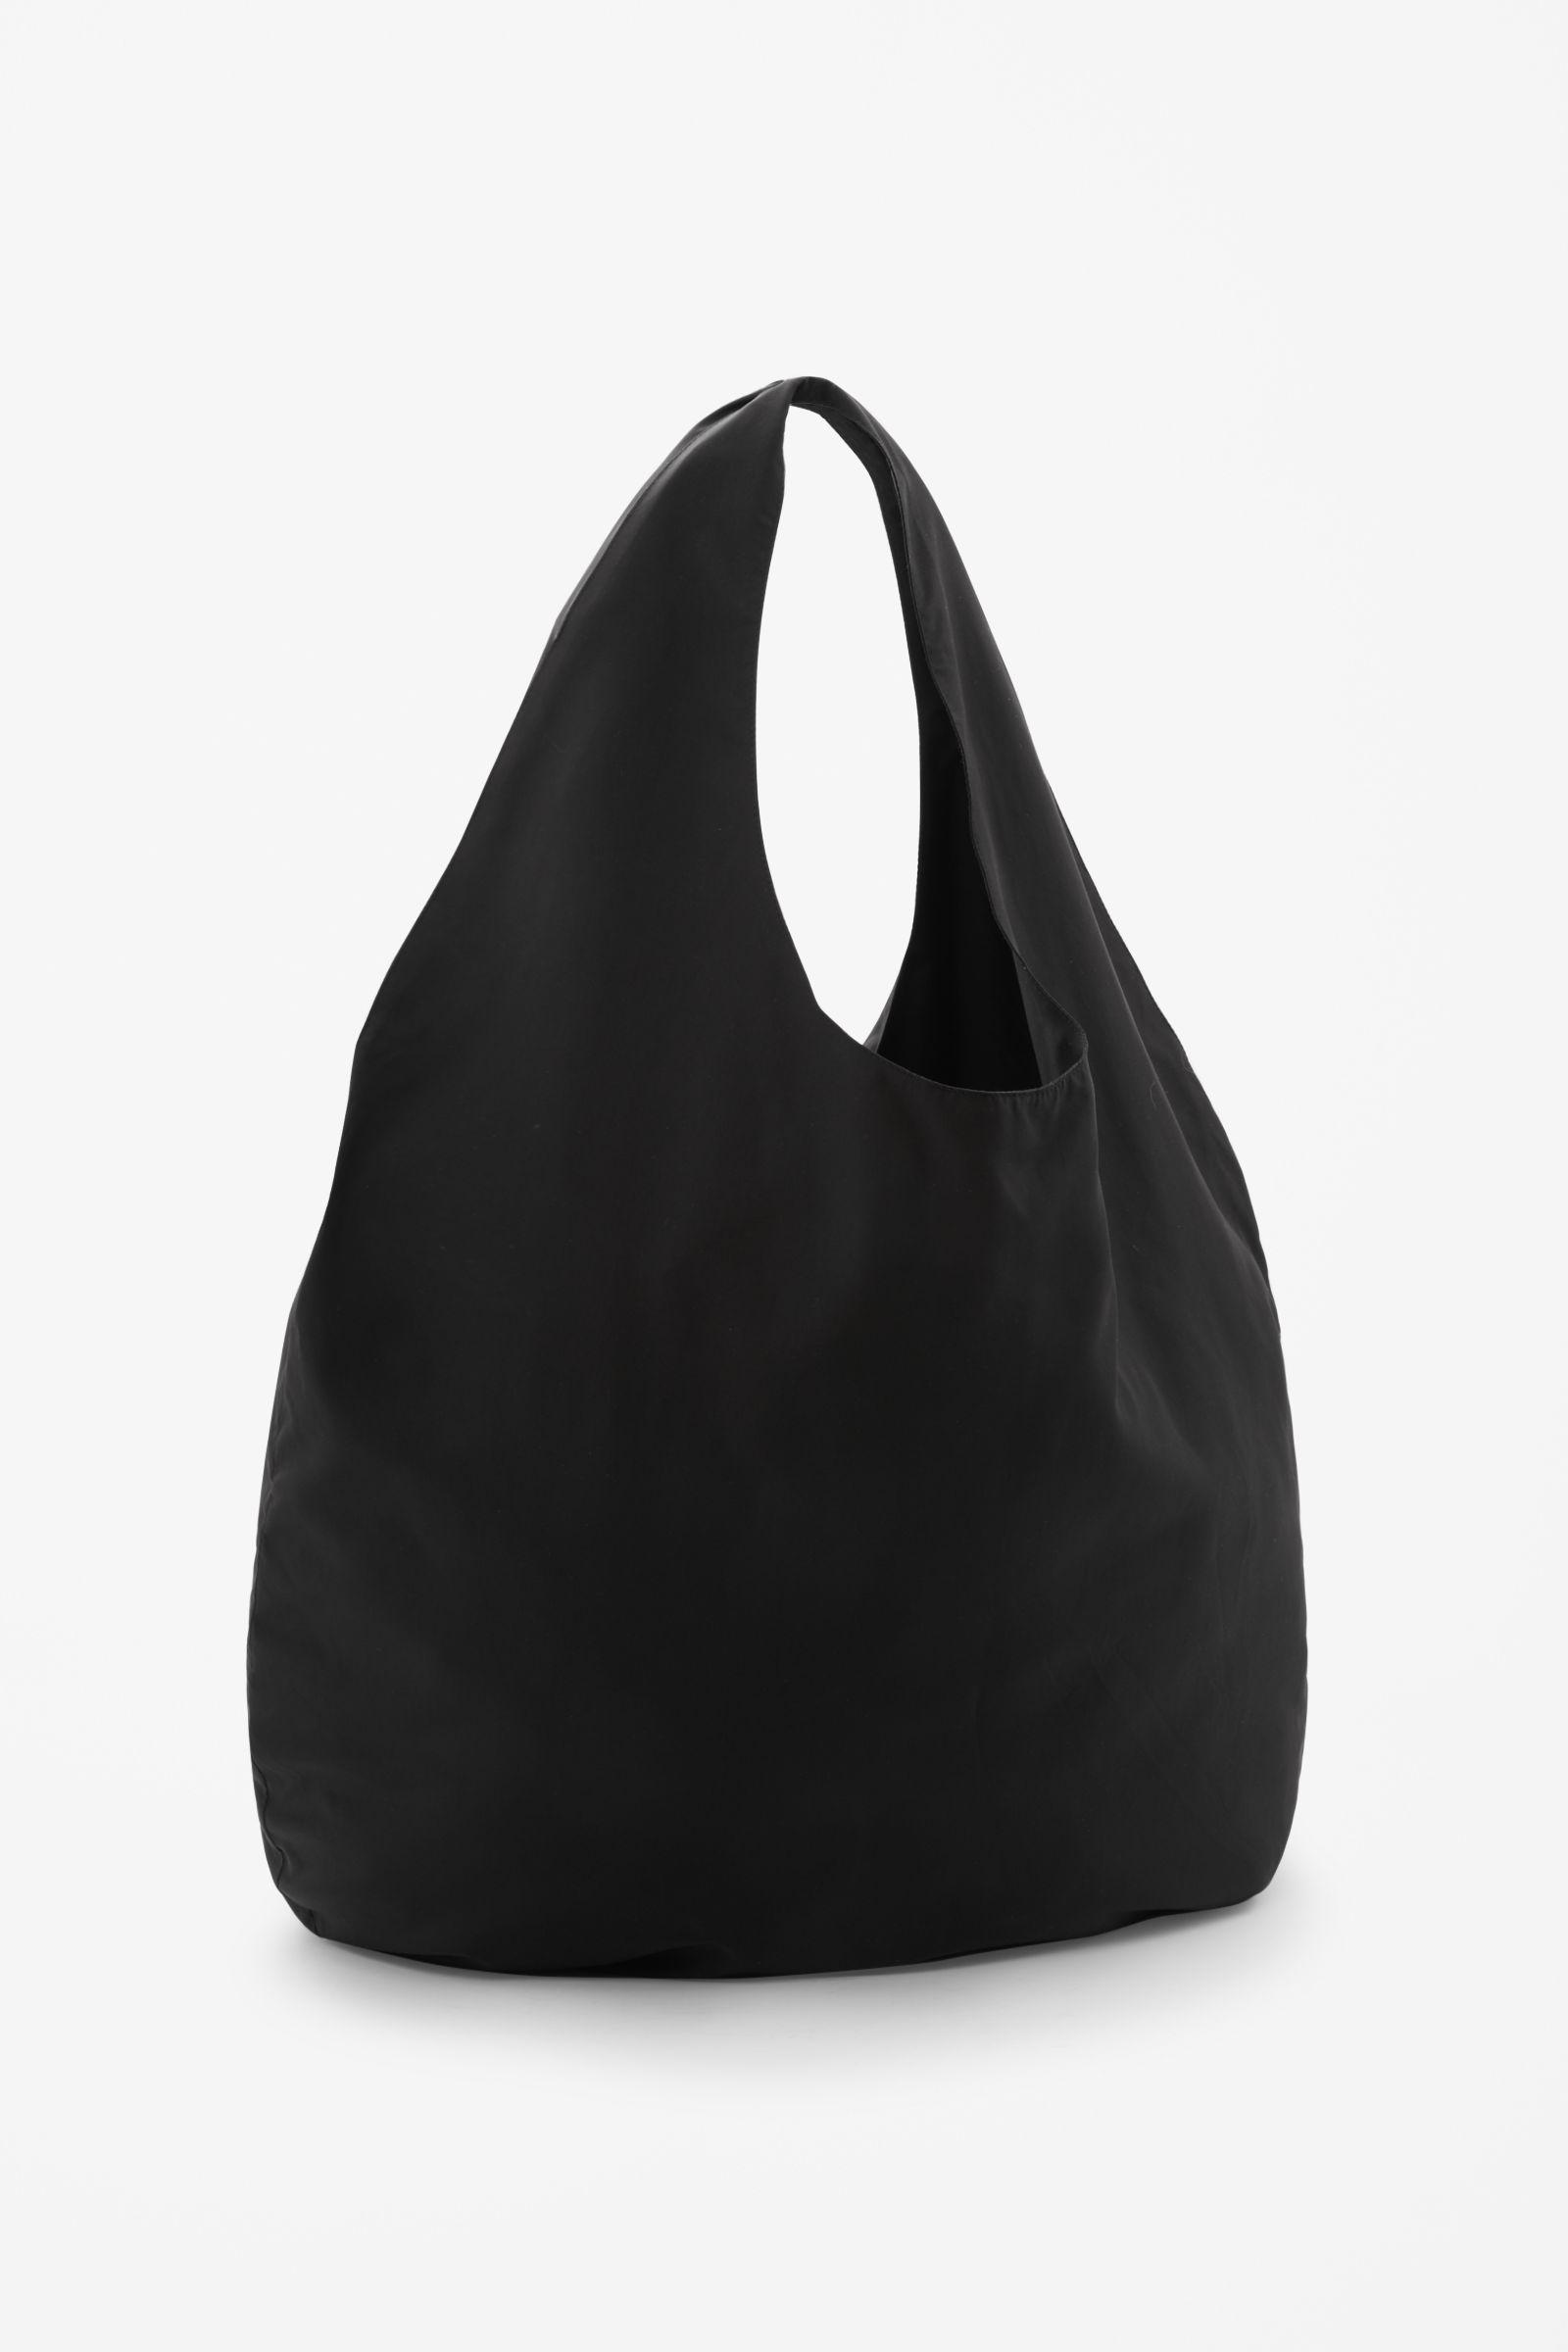 COS Cotton Soft Shopper Bag in Black - Lyst